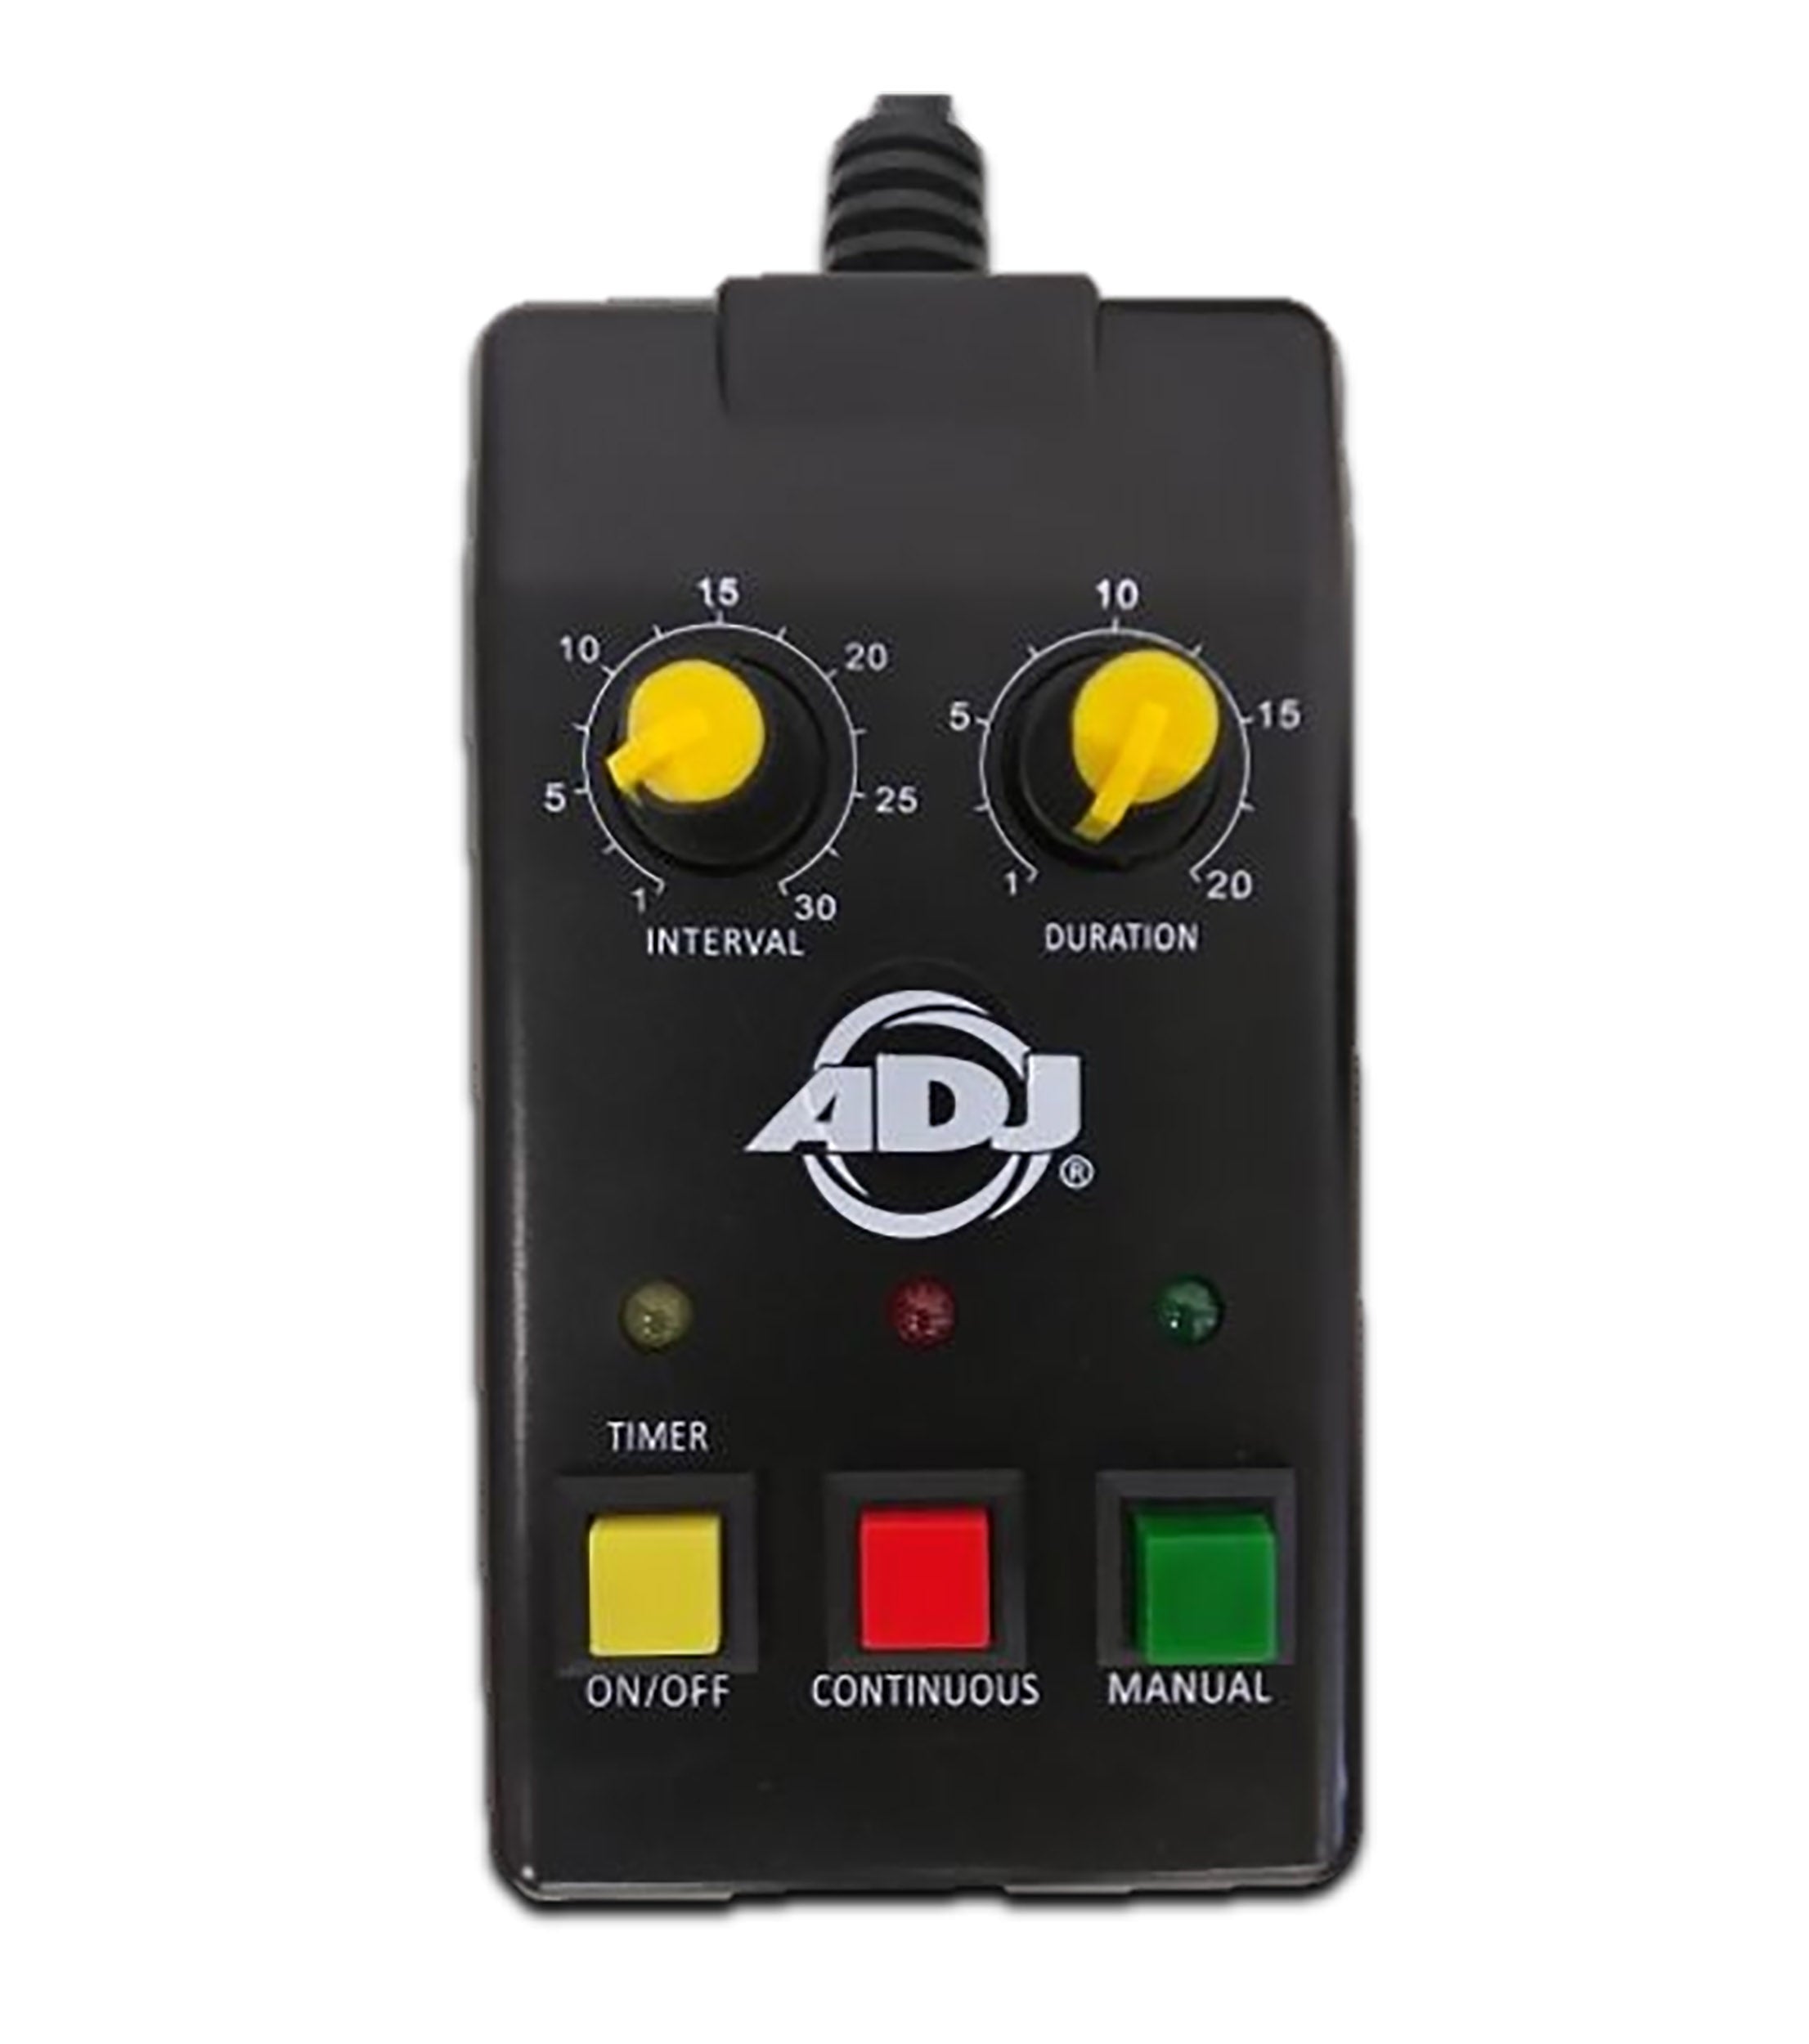 ADJ VFTR40, Timer Remote for VF400 Fog Machines by ADJ